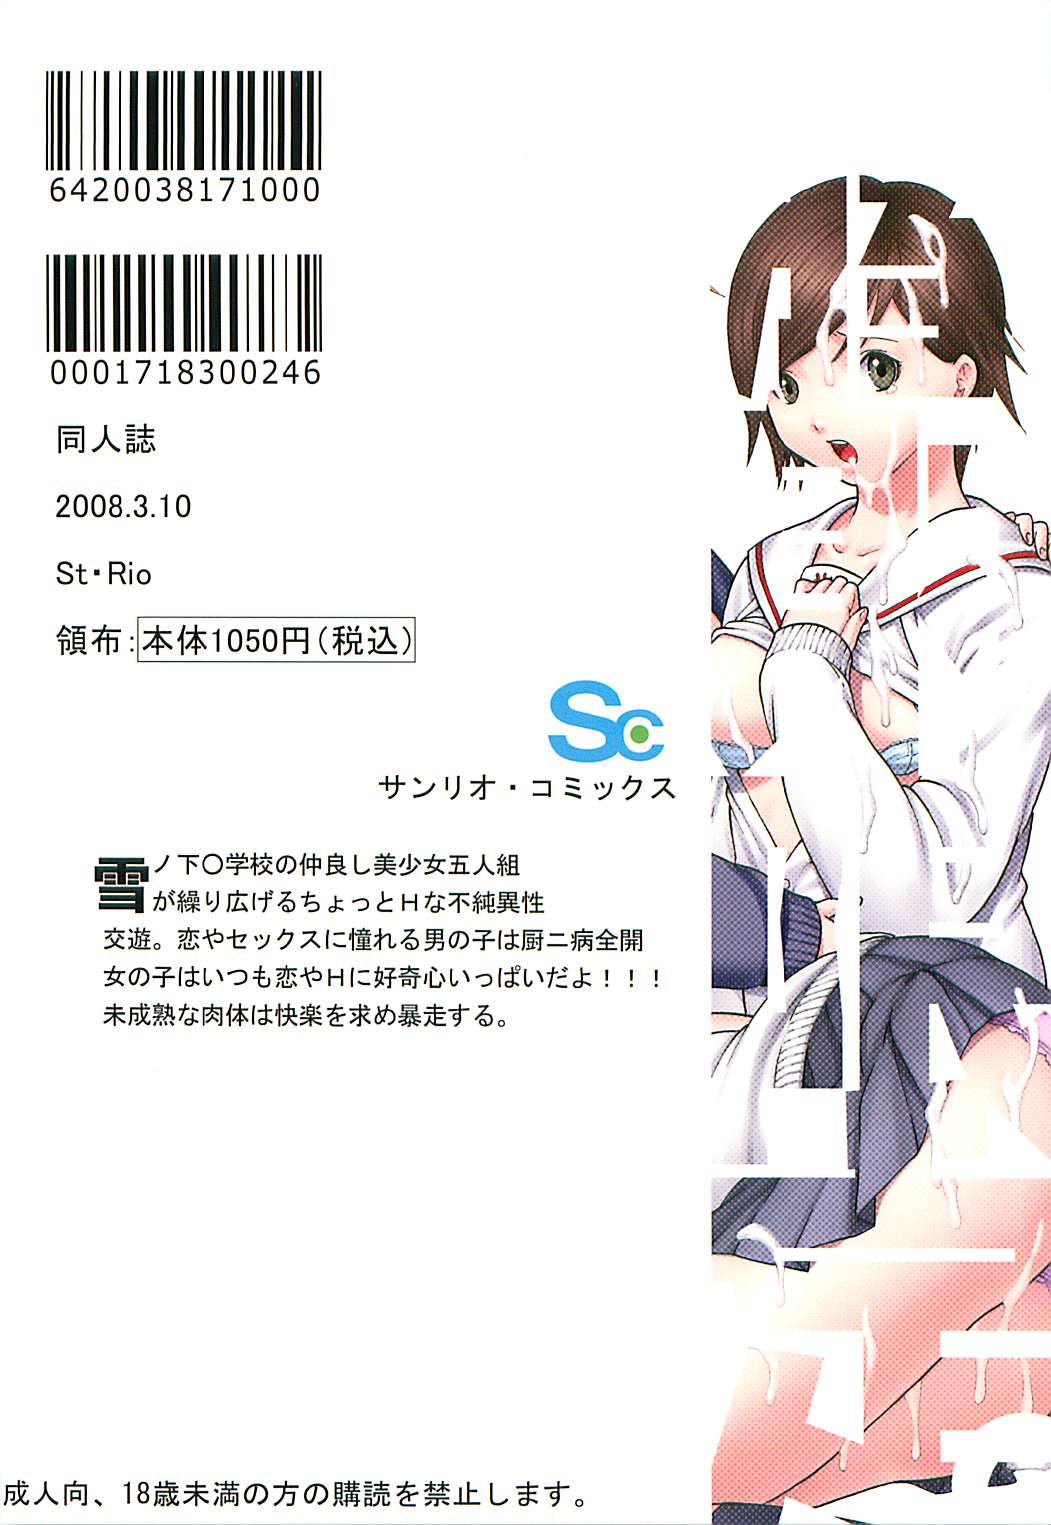 [St. Rio] Chitsui Gentei Nakadashi Limited vol.4 (Hatsukoi Limited) 